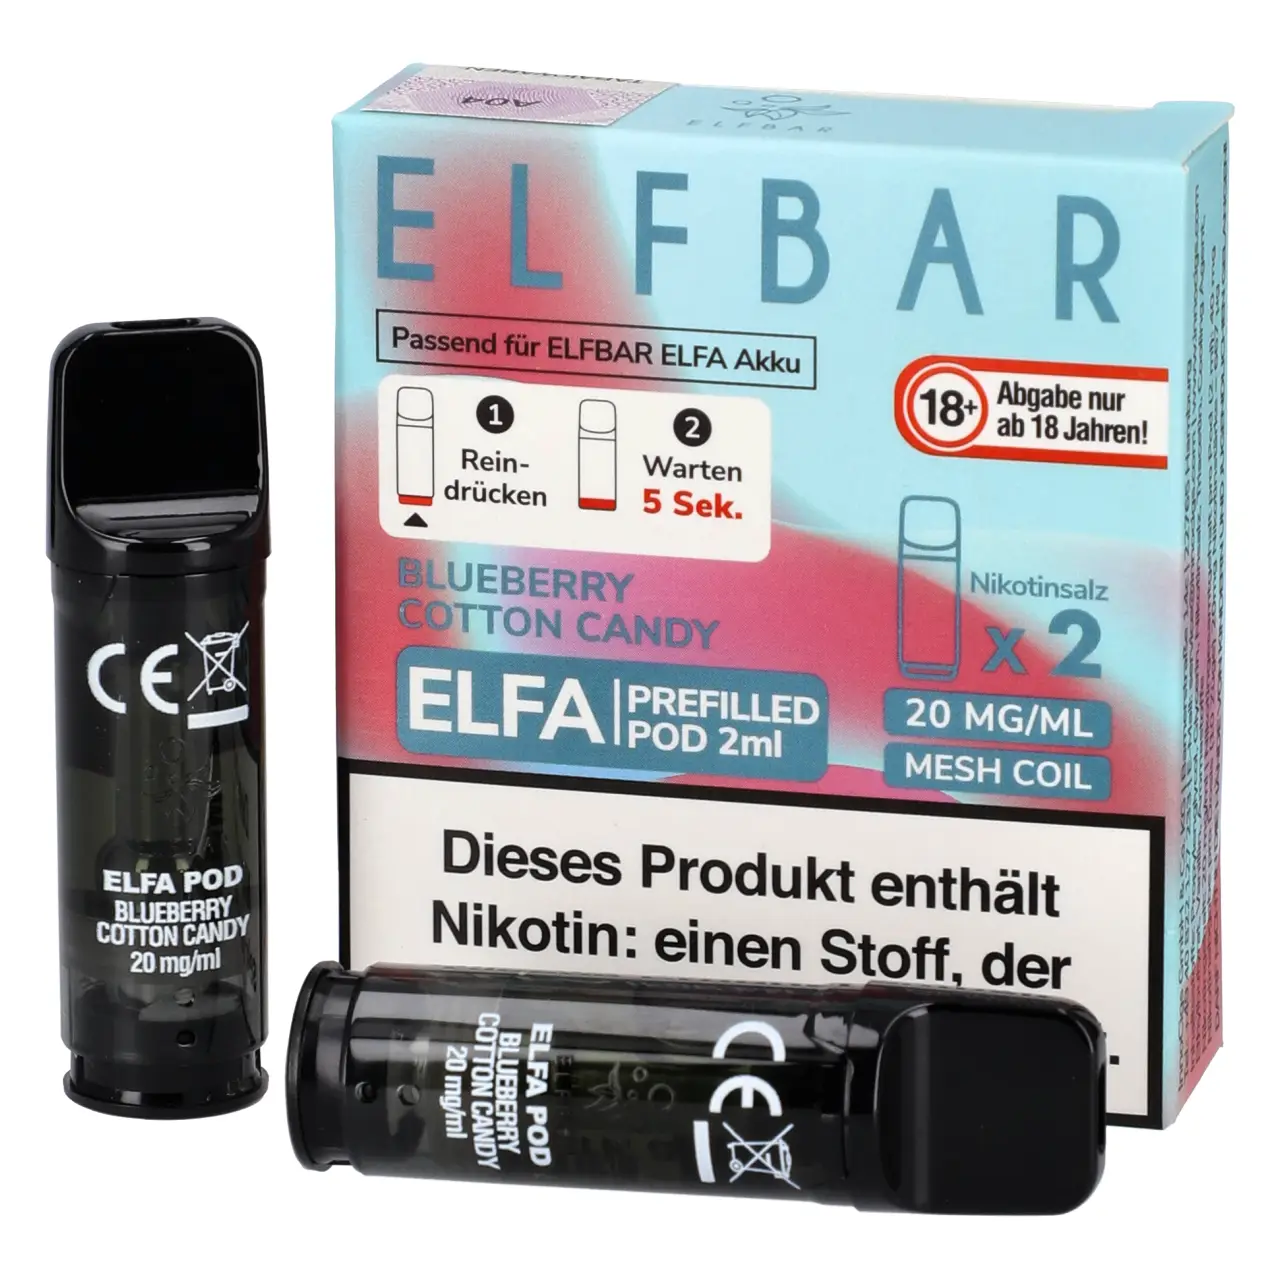 Blueberry Cotton Candy - Elf Bar ELFA Prefilled POD für Mehrweg Vape - befüllt mit 2ml Liquid - 2er Packung